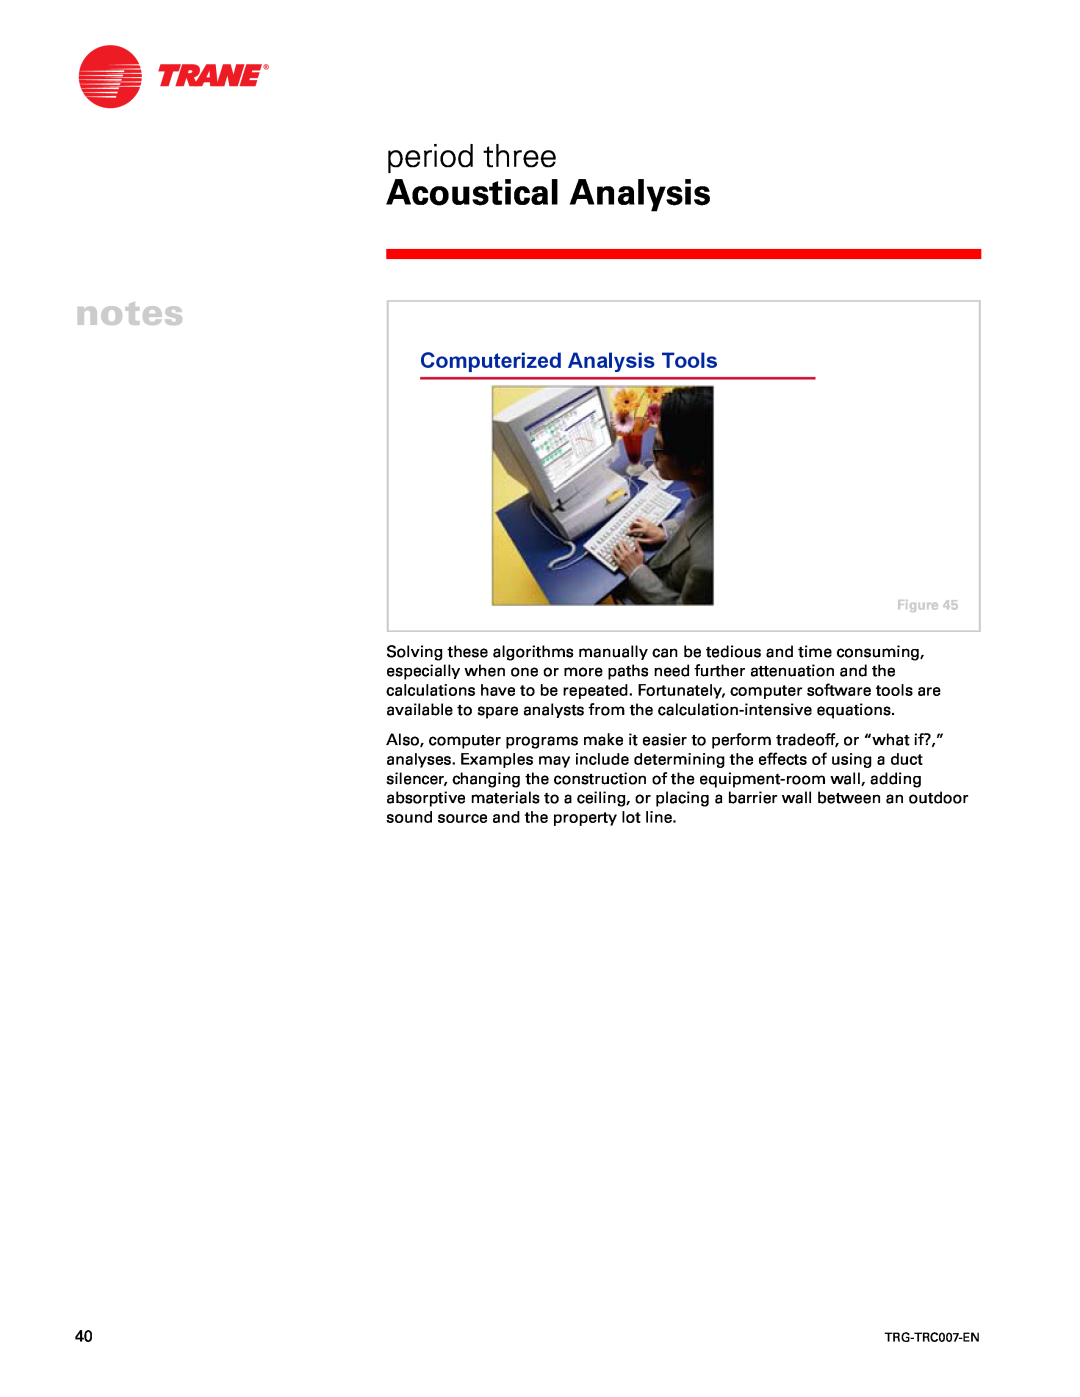 Trane TRG-TRC007-EN manual Computerized Analysis Tools, Acoustical Analysis, period three 